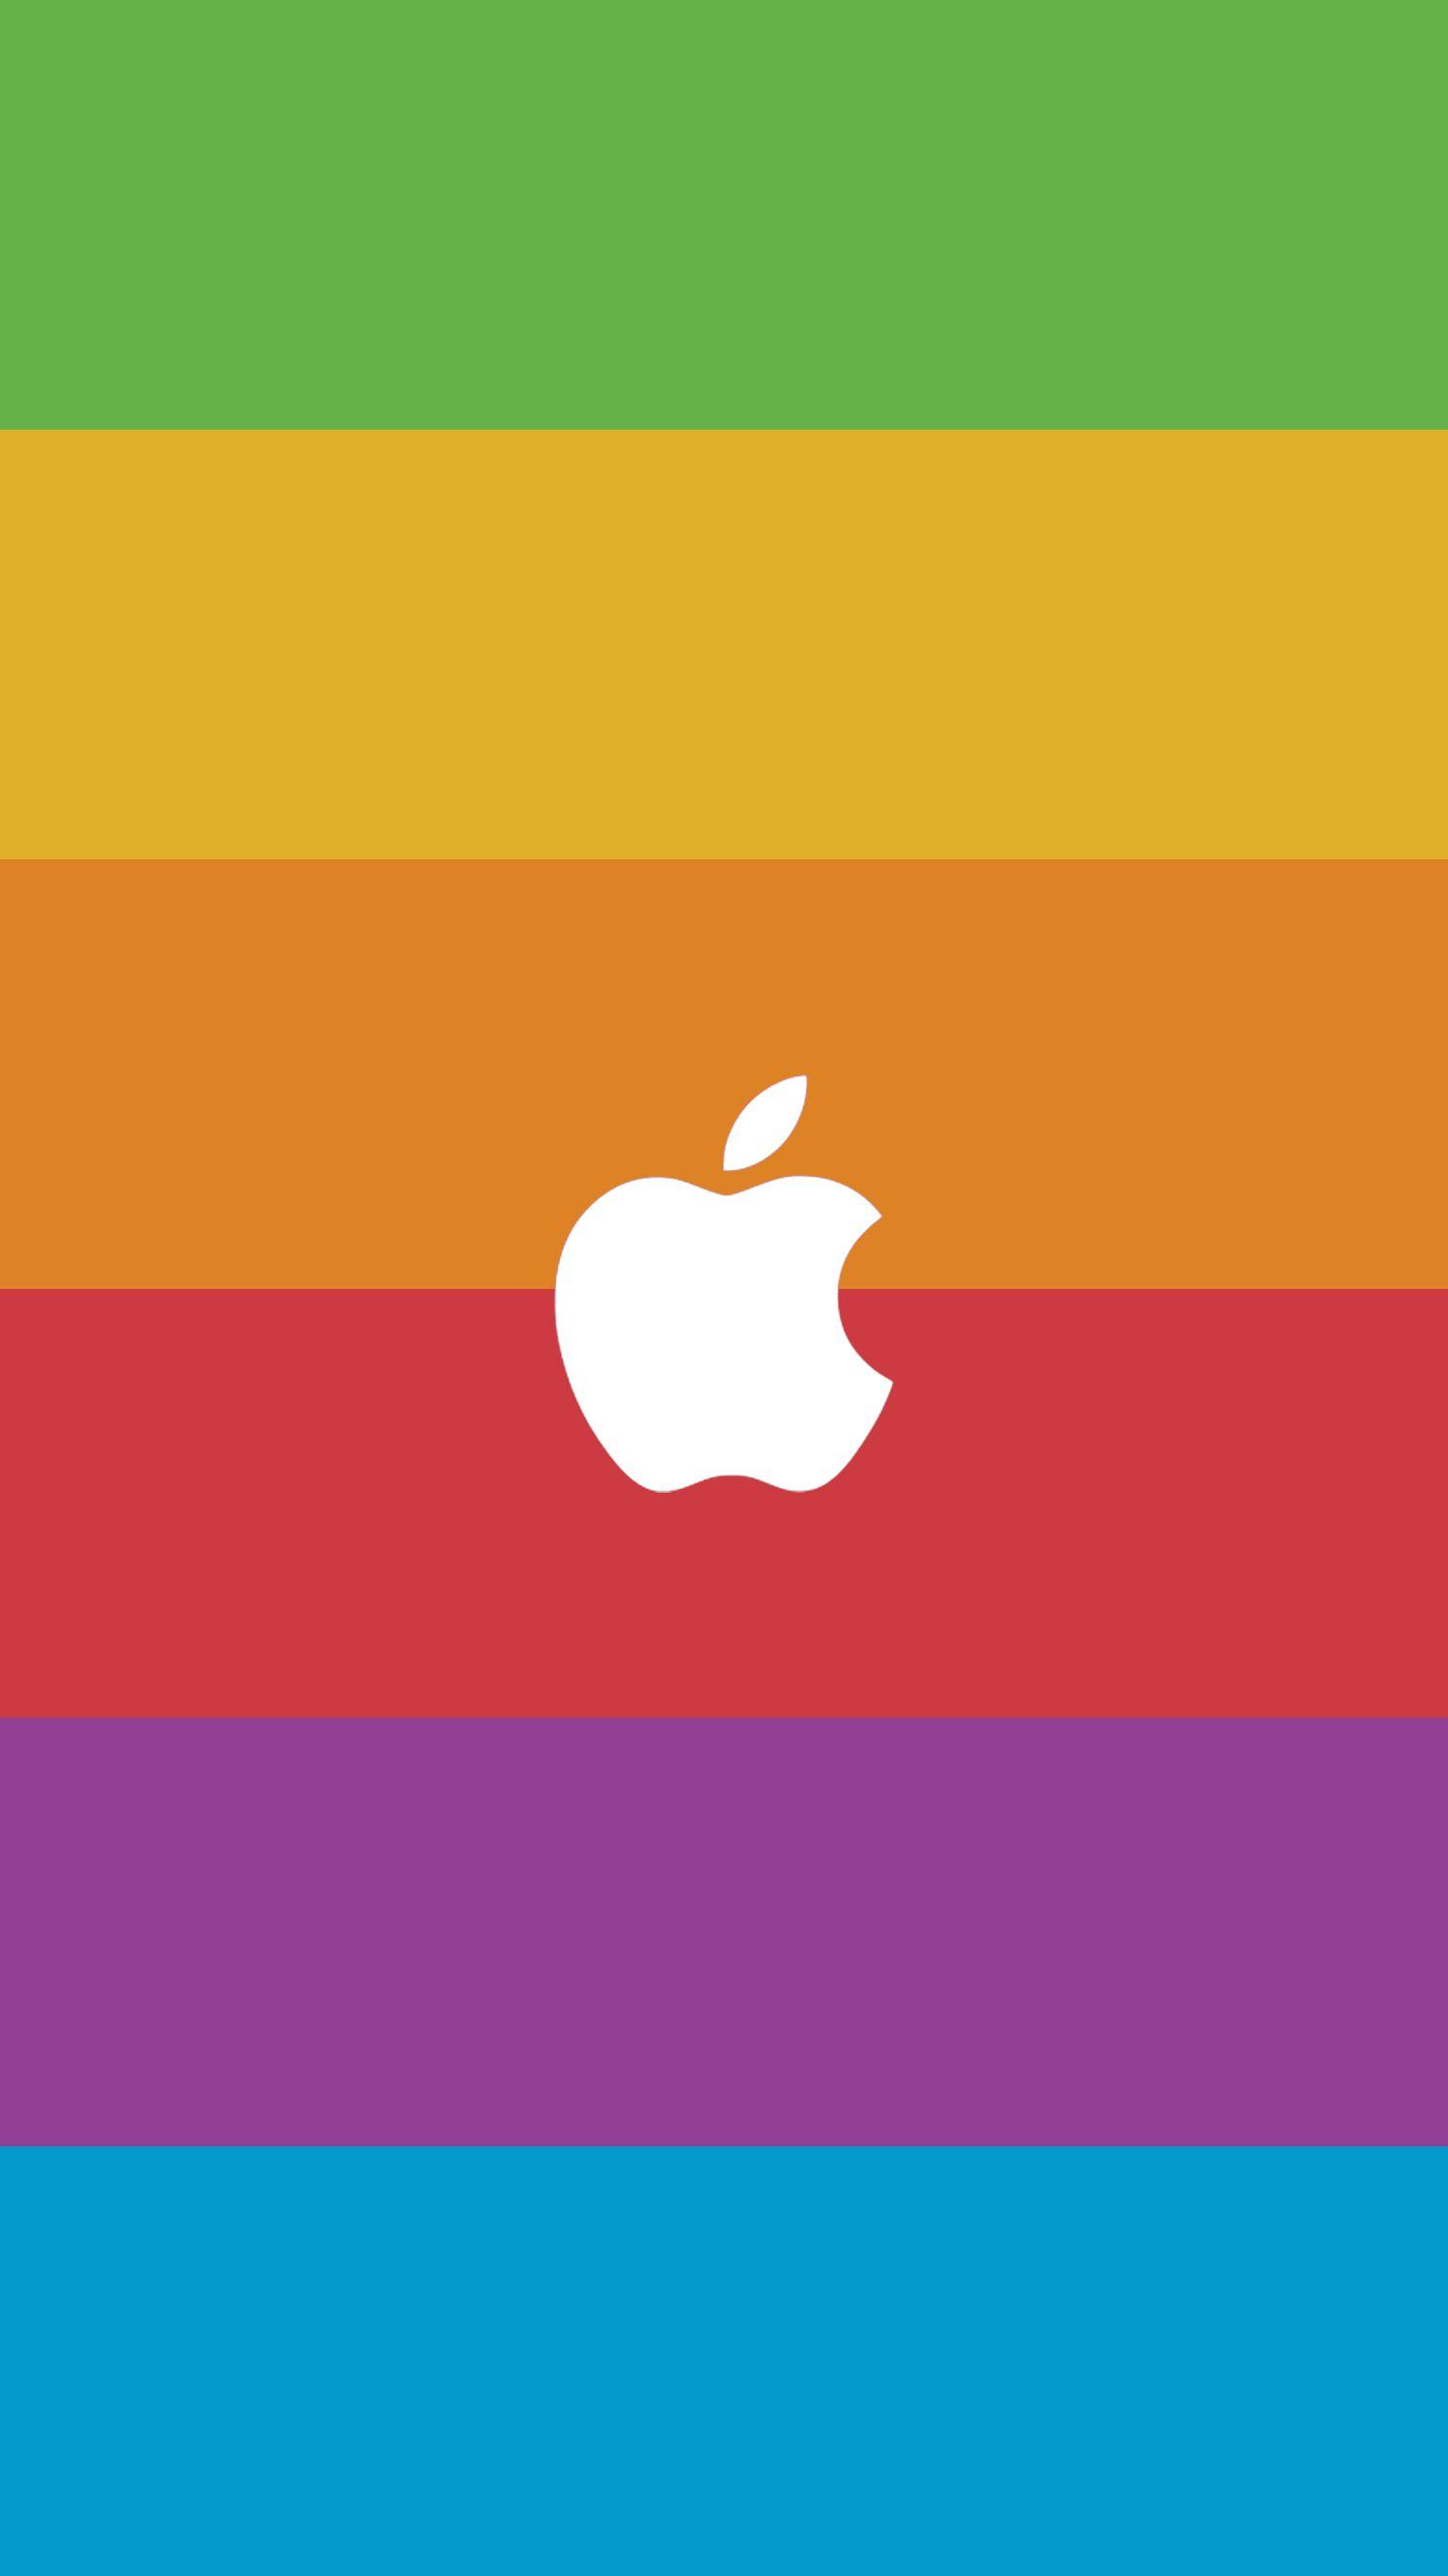 Rainbow Apple Wallpapers - Top Free Rainbow Apple Backgrounds ...